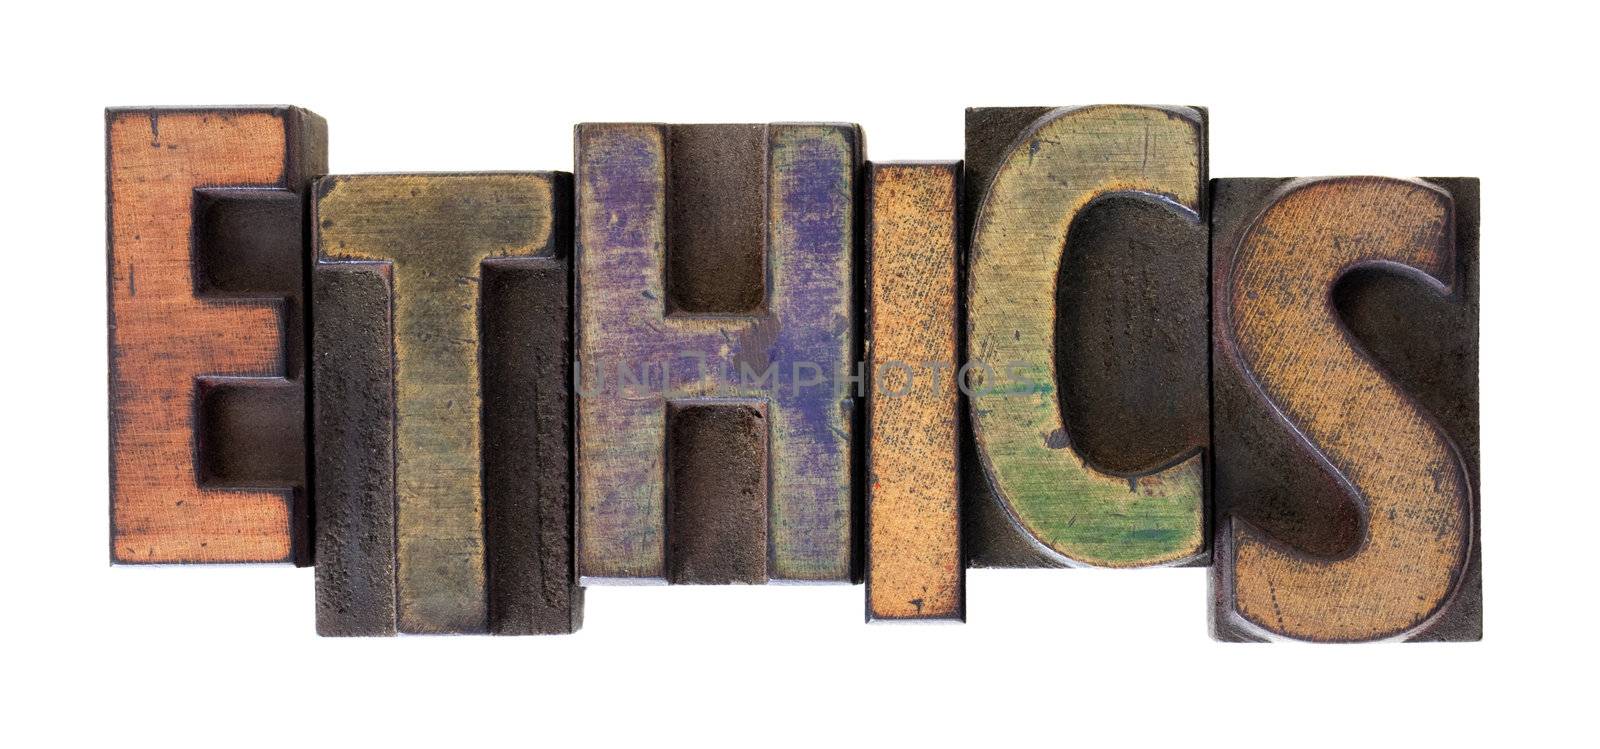 ethics word in vintage wooden letterpress type by PixelsAway